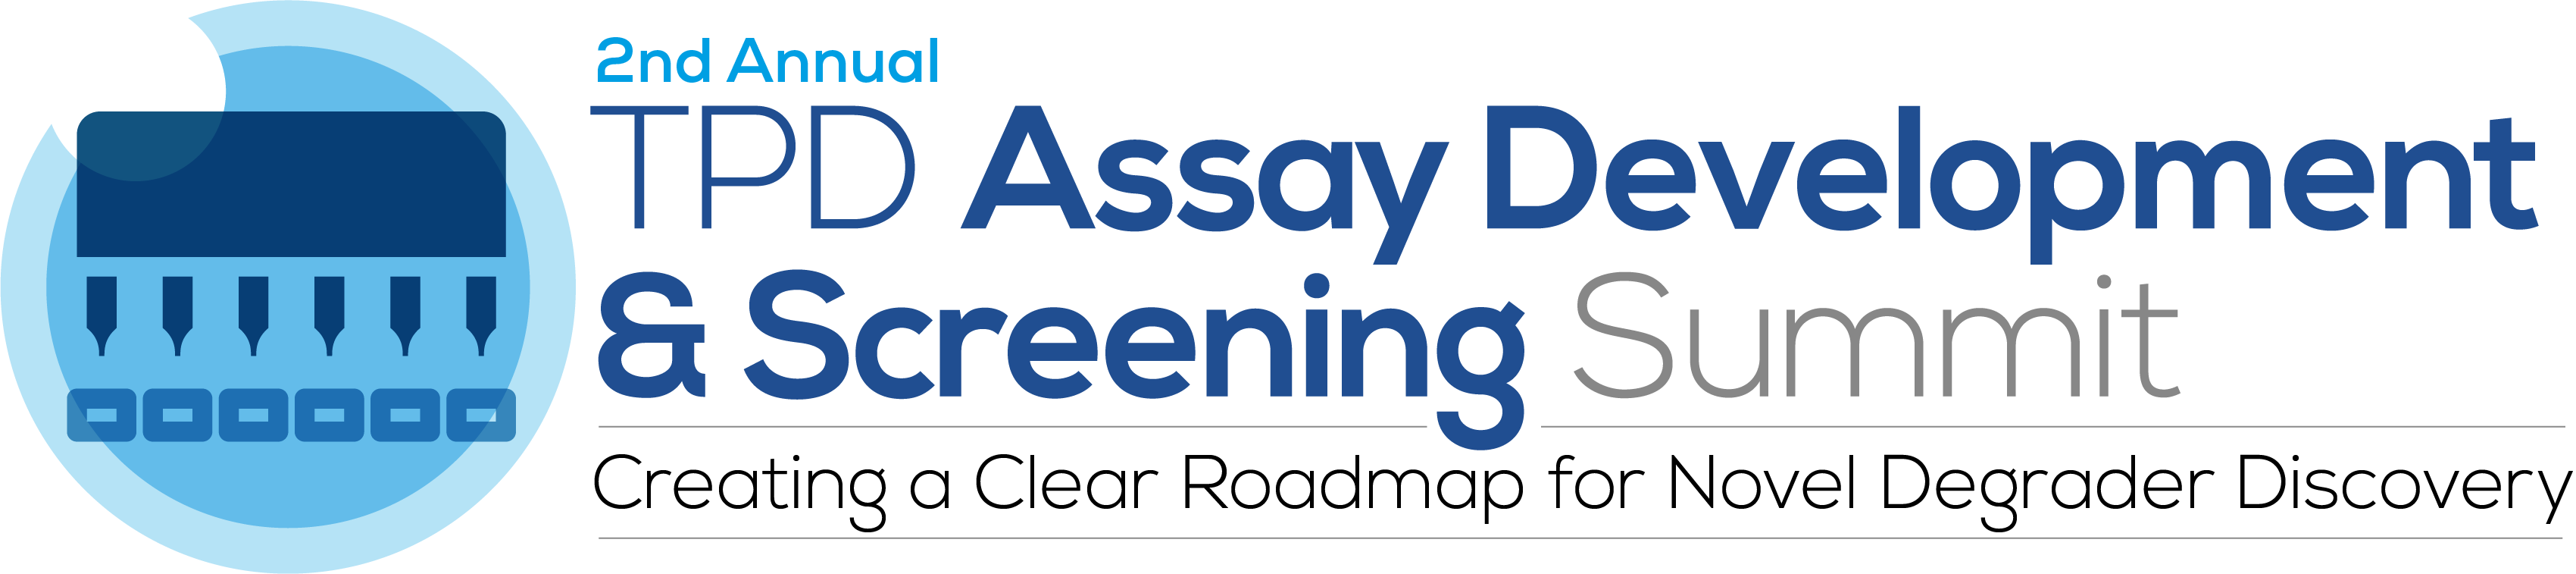 HW230629 33922 – 2nd TPD Assay Development & Screening Summit logo